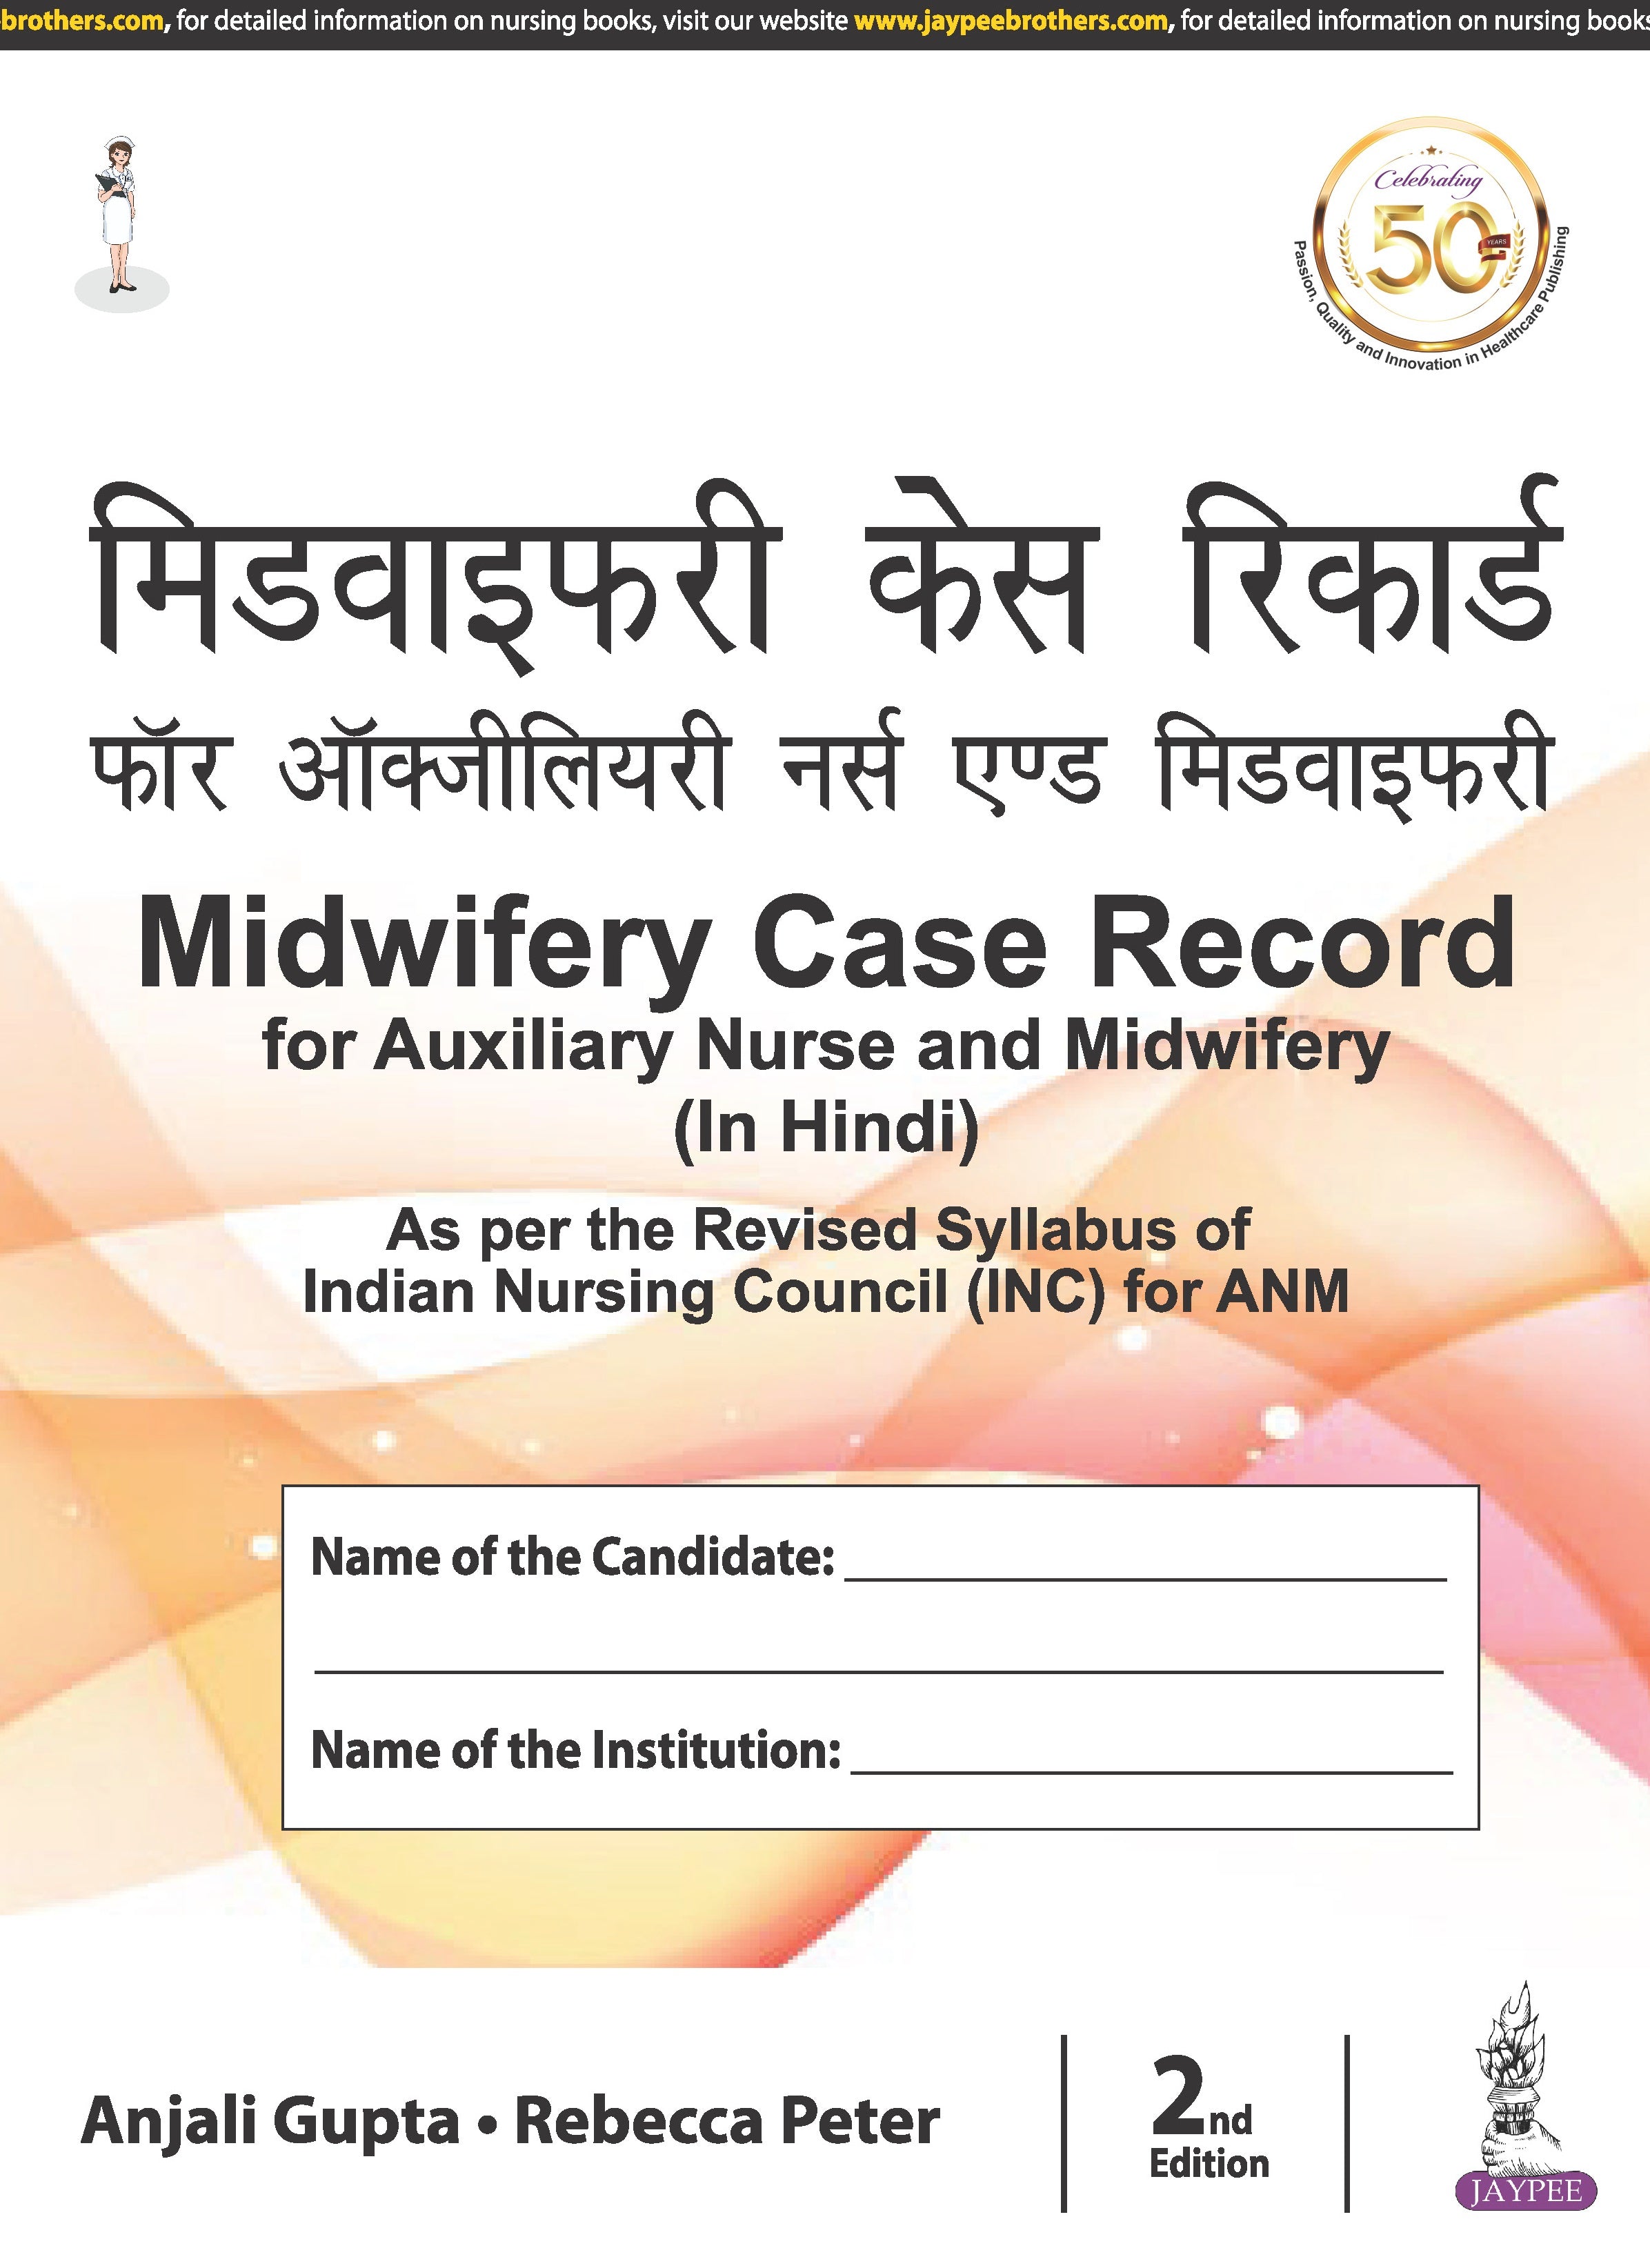 MIDWIFERY CASE RECORD FOR AUXILIARY NURSE AND MIDWIFERY  (IN HINDI),2/E,ANJALI GUPTA